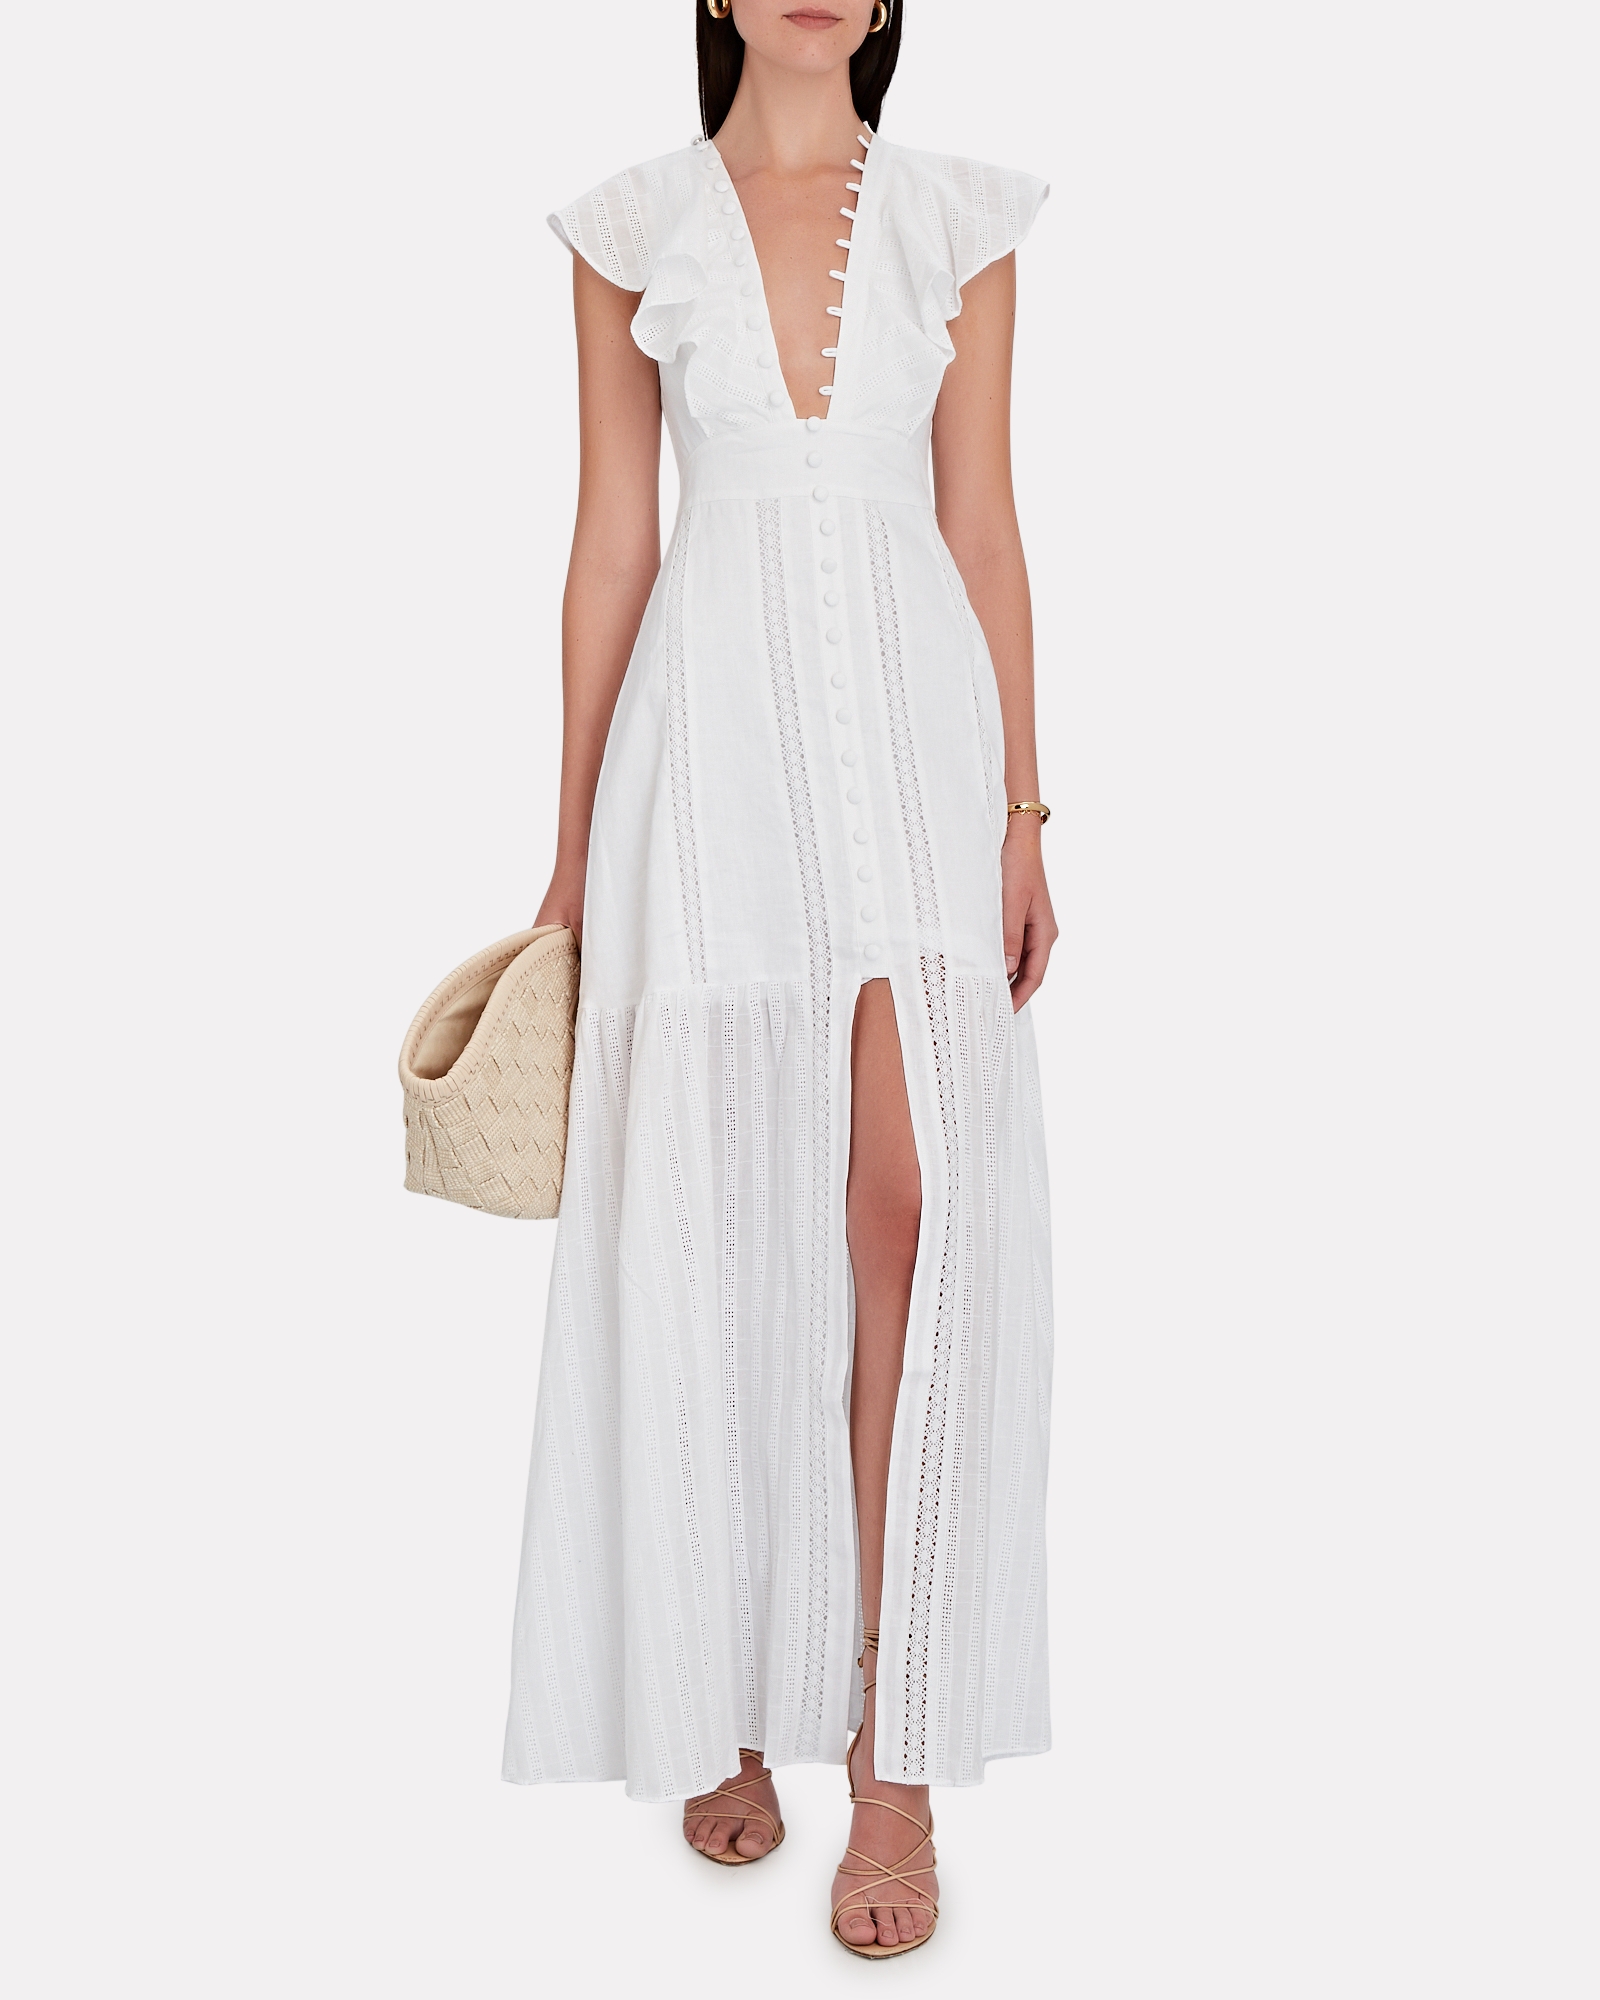 Joslin Maxine Cotton Linen Lace Maxi Dress | INTERMIX®